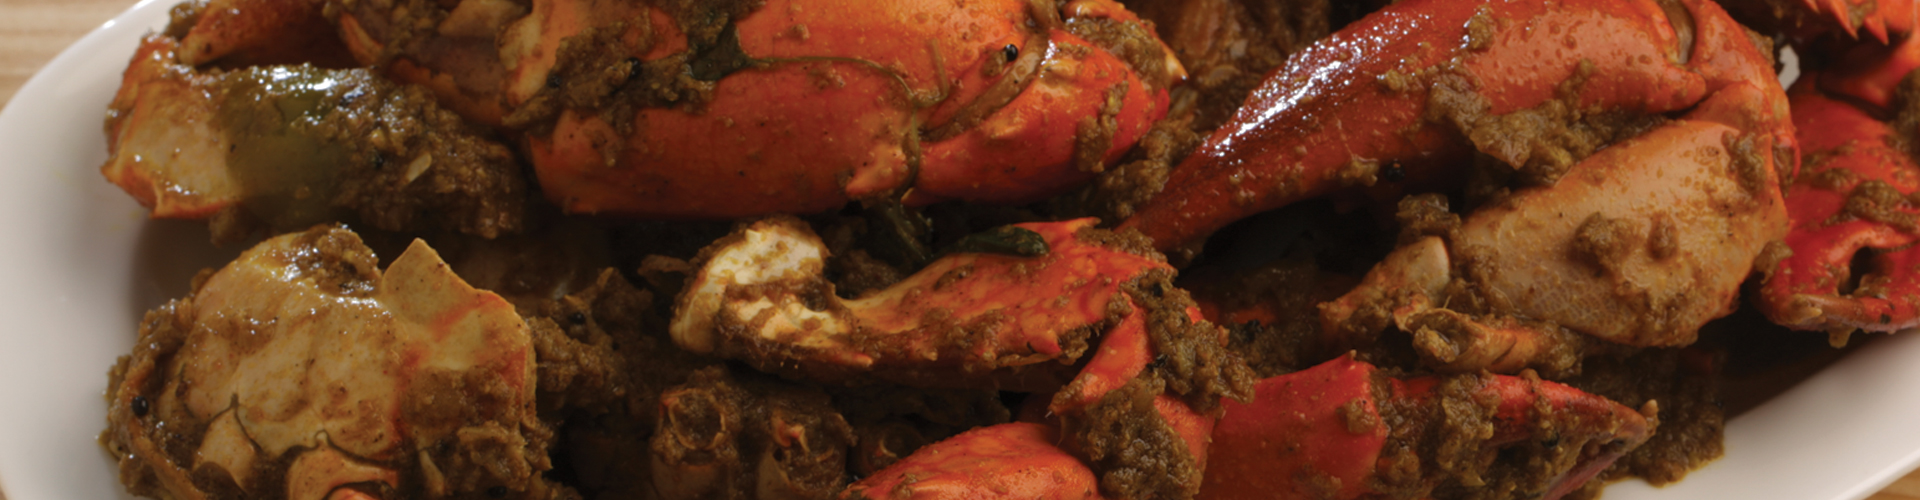 Sampan Cafe & Restaurant's tasty Crab Masala Curry